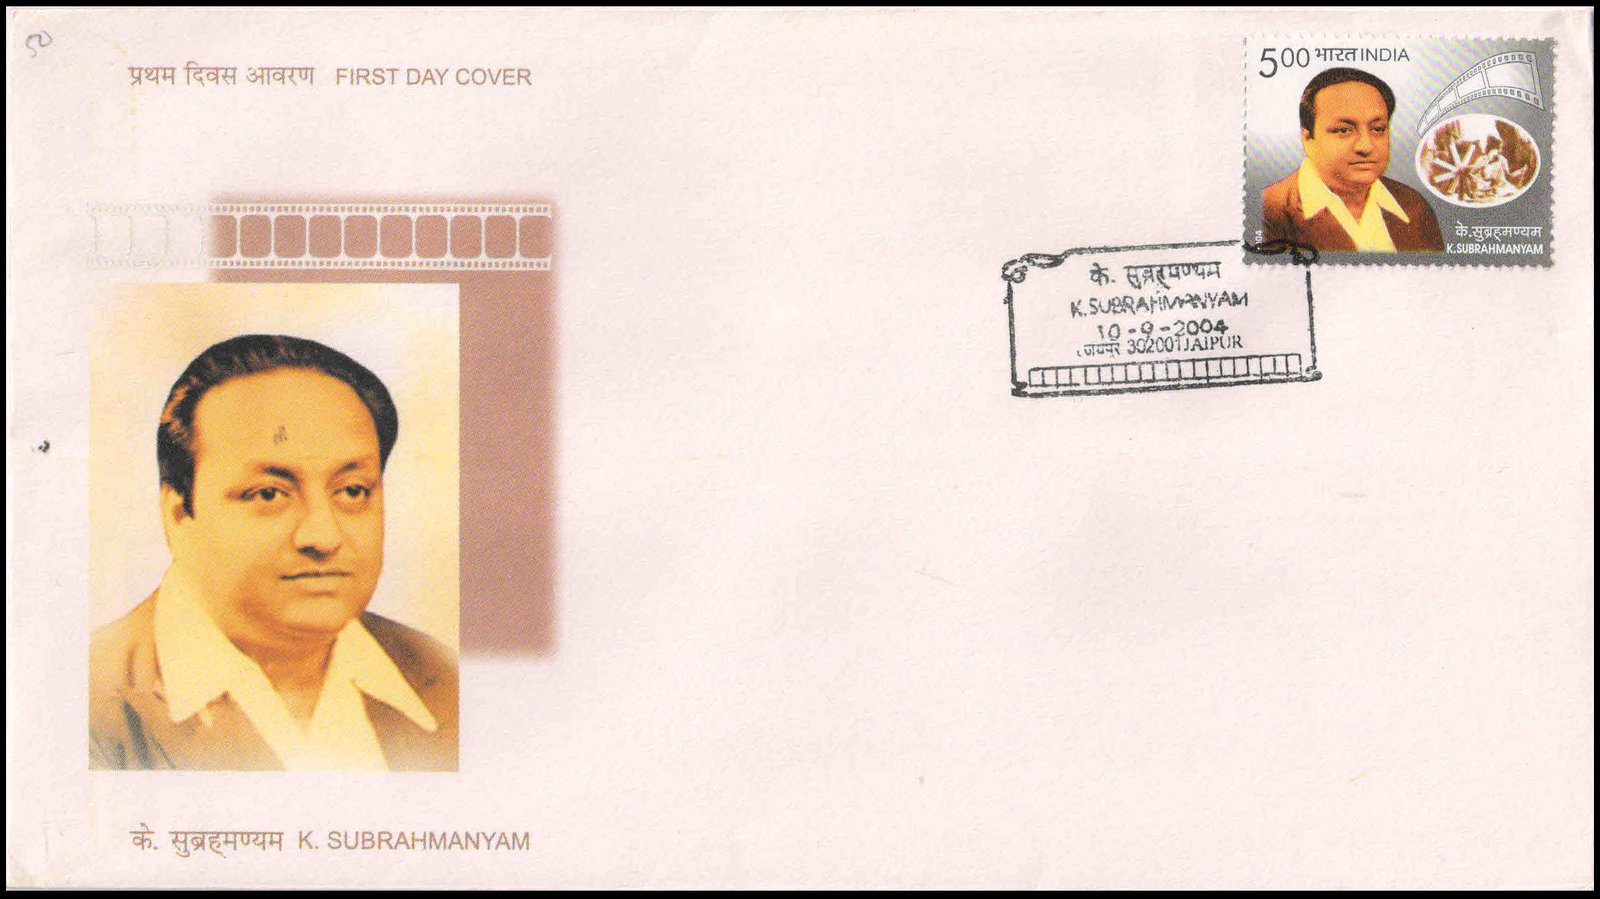 10-9-2004, K. Subrahmanyam Rs. 5-00, Film Maker. FDC.